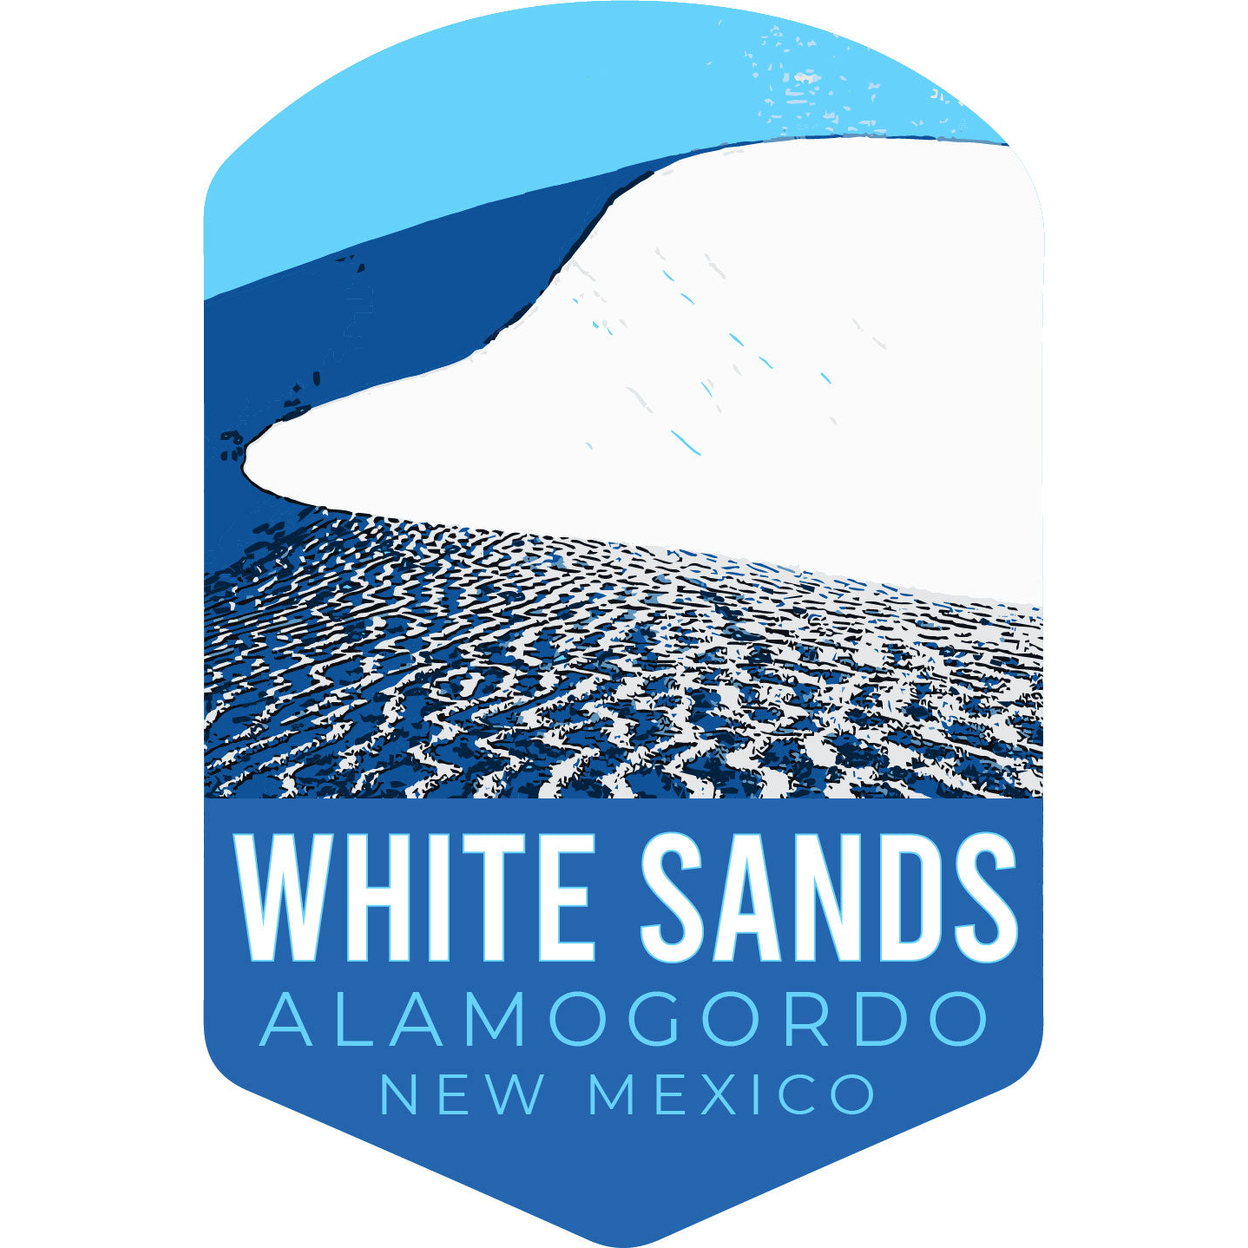 White Sands Alamogordo New Mexico Souvenir 4-Inch Vinyl Decal Sticker - Design A